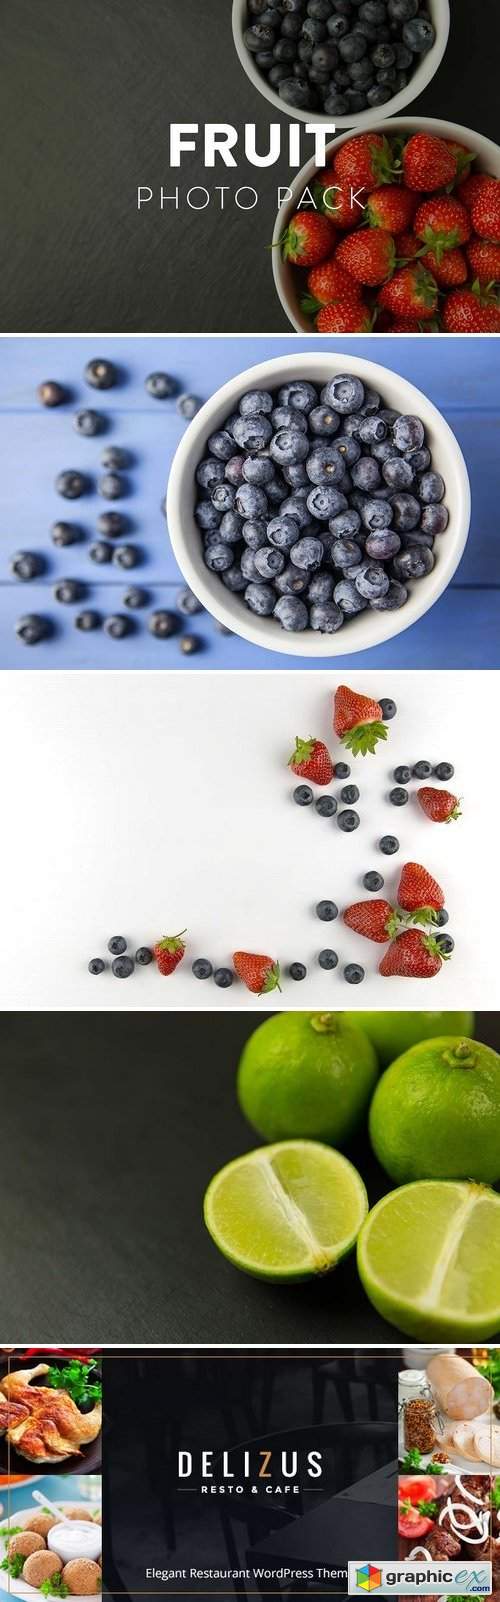 Fruit Photo Pack